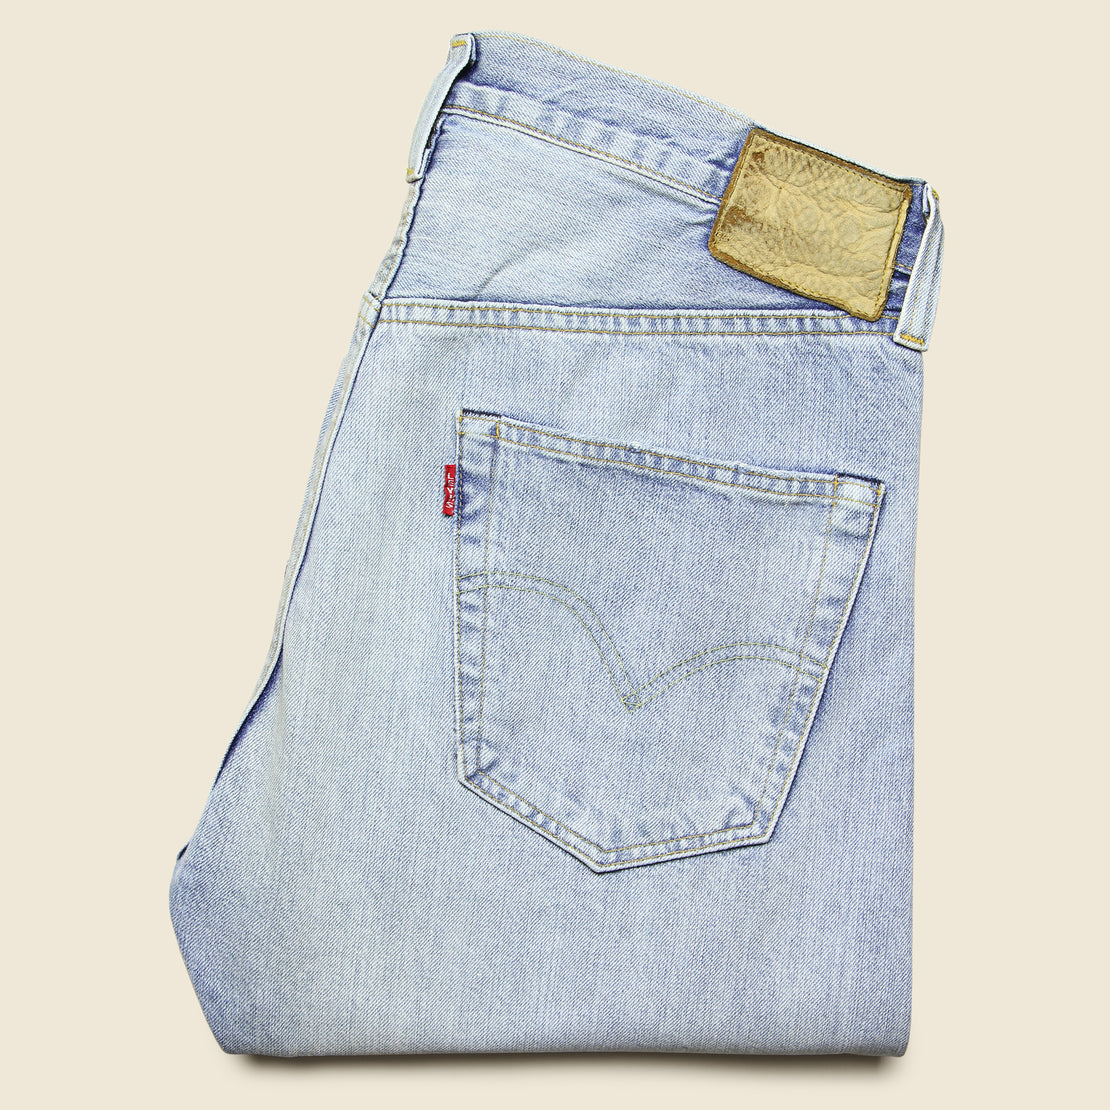 1947 501 Jean - Whiplash - Levis Vintage Clothing - STAG Provisions - Pants - Denim